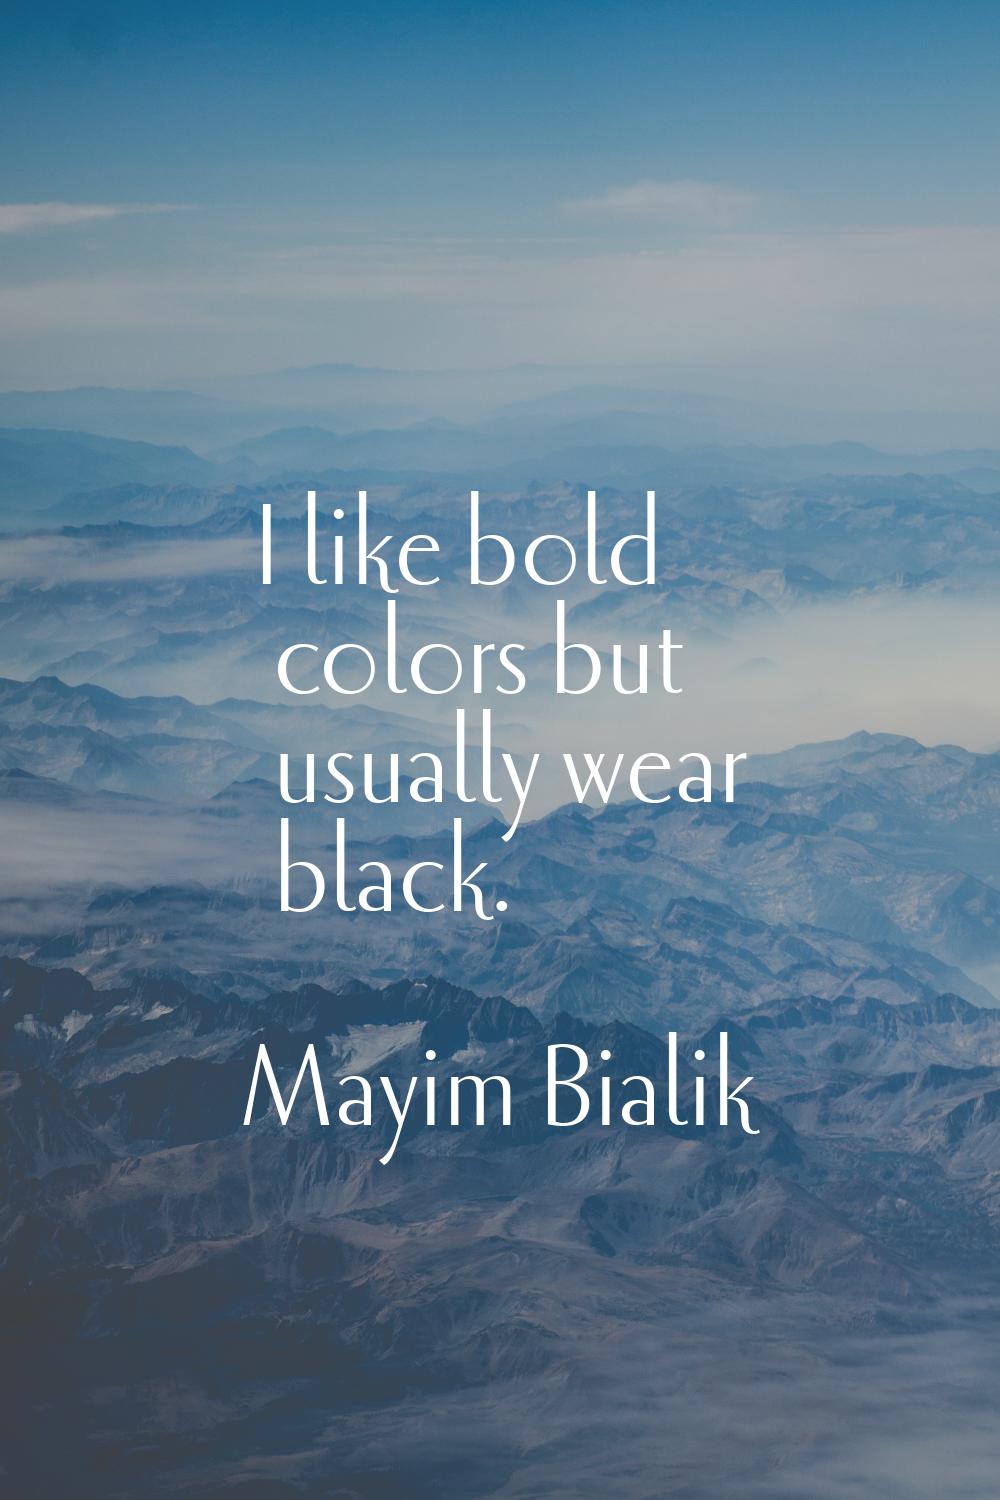 I like bold colors but usually wear black.